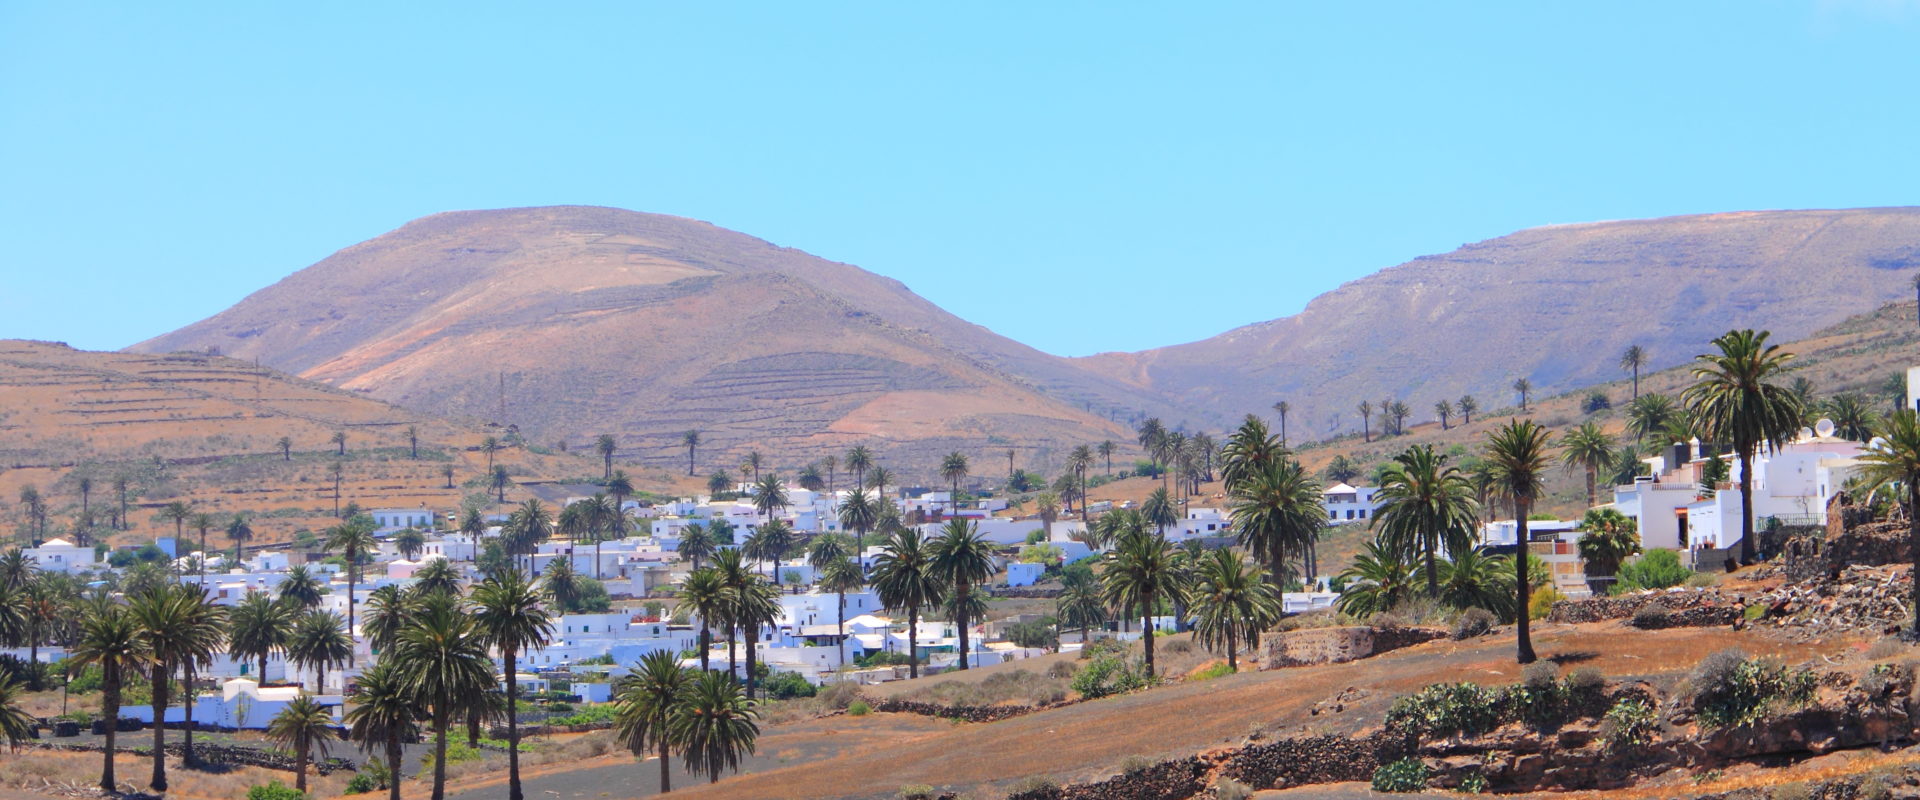 Haria, das Tal der tausend Palmen, Lanzarote